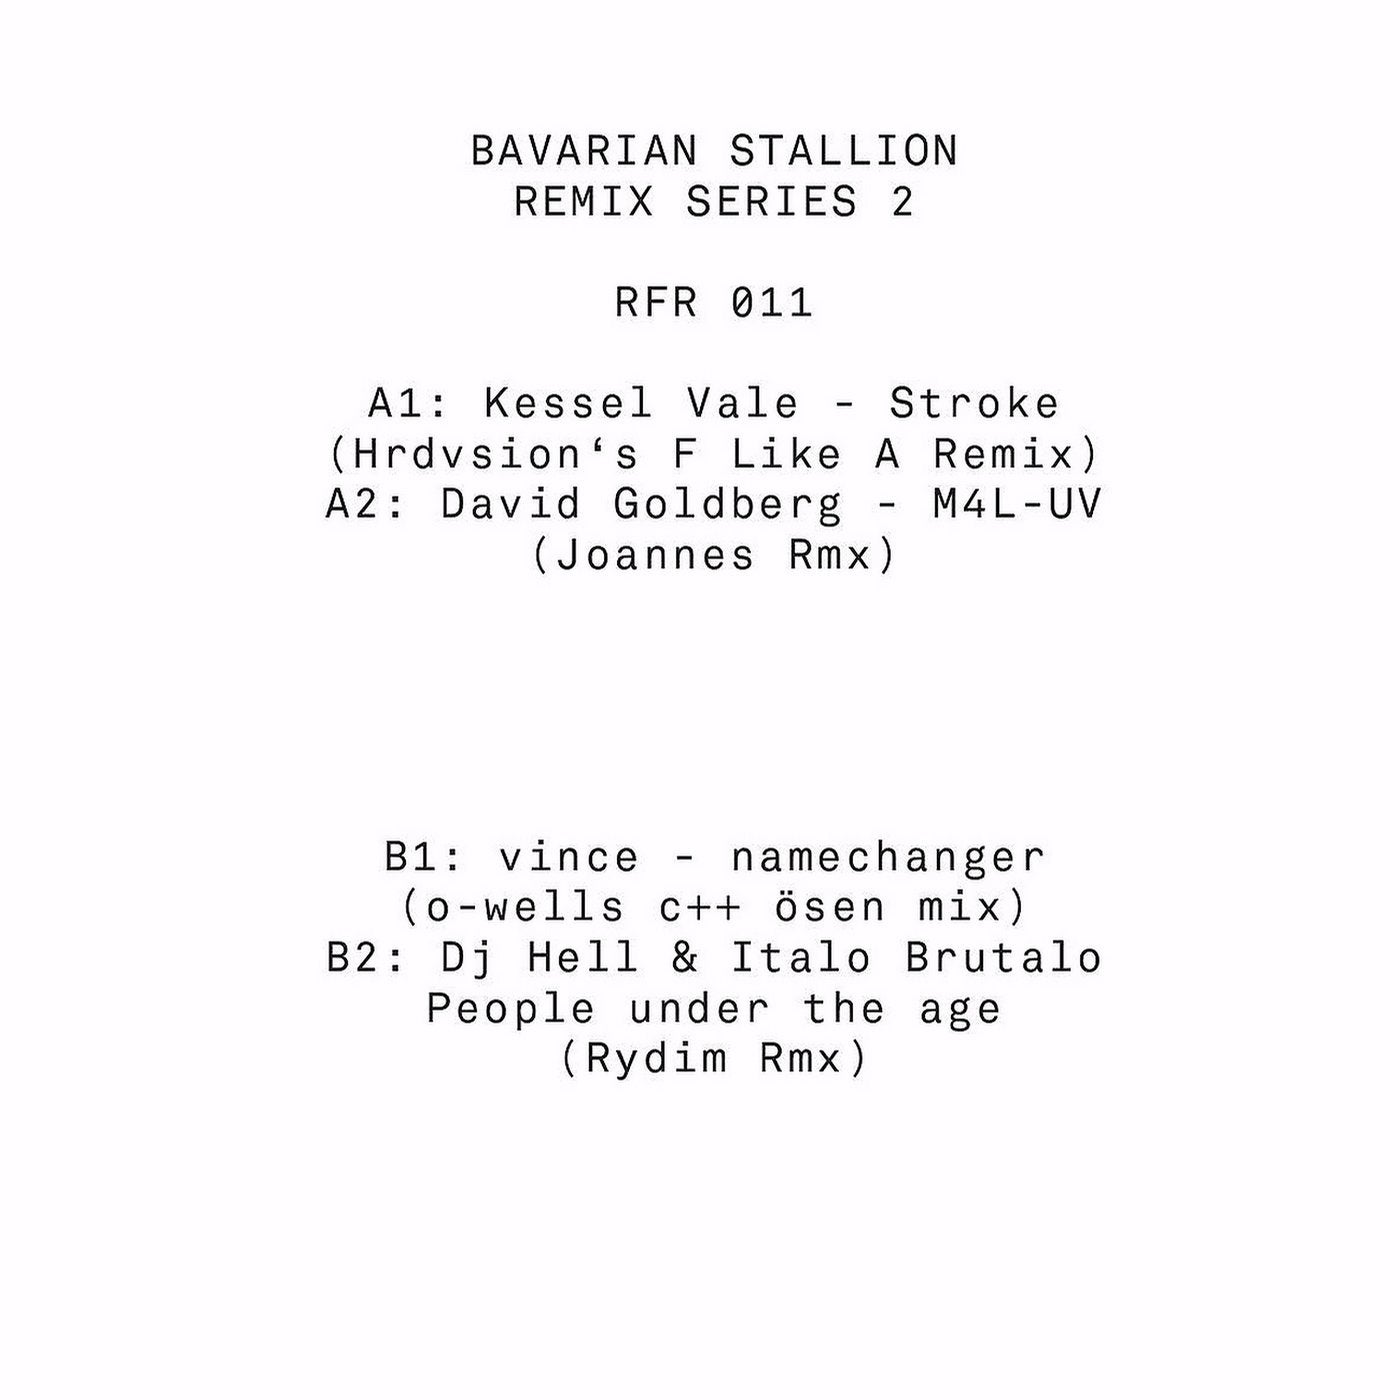 Bavarian Stallion Remix Series 2